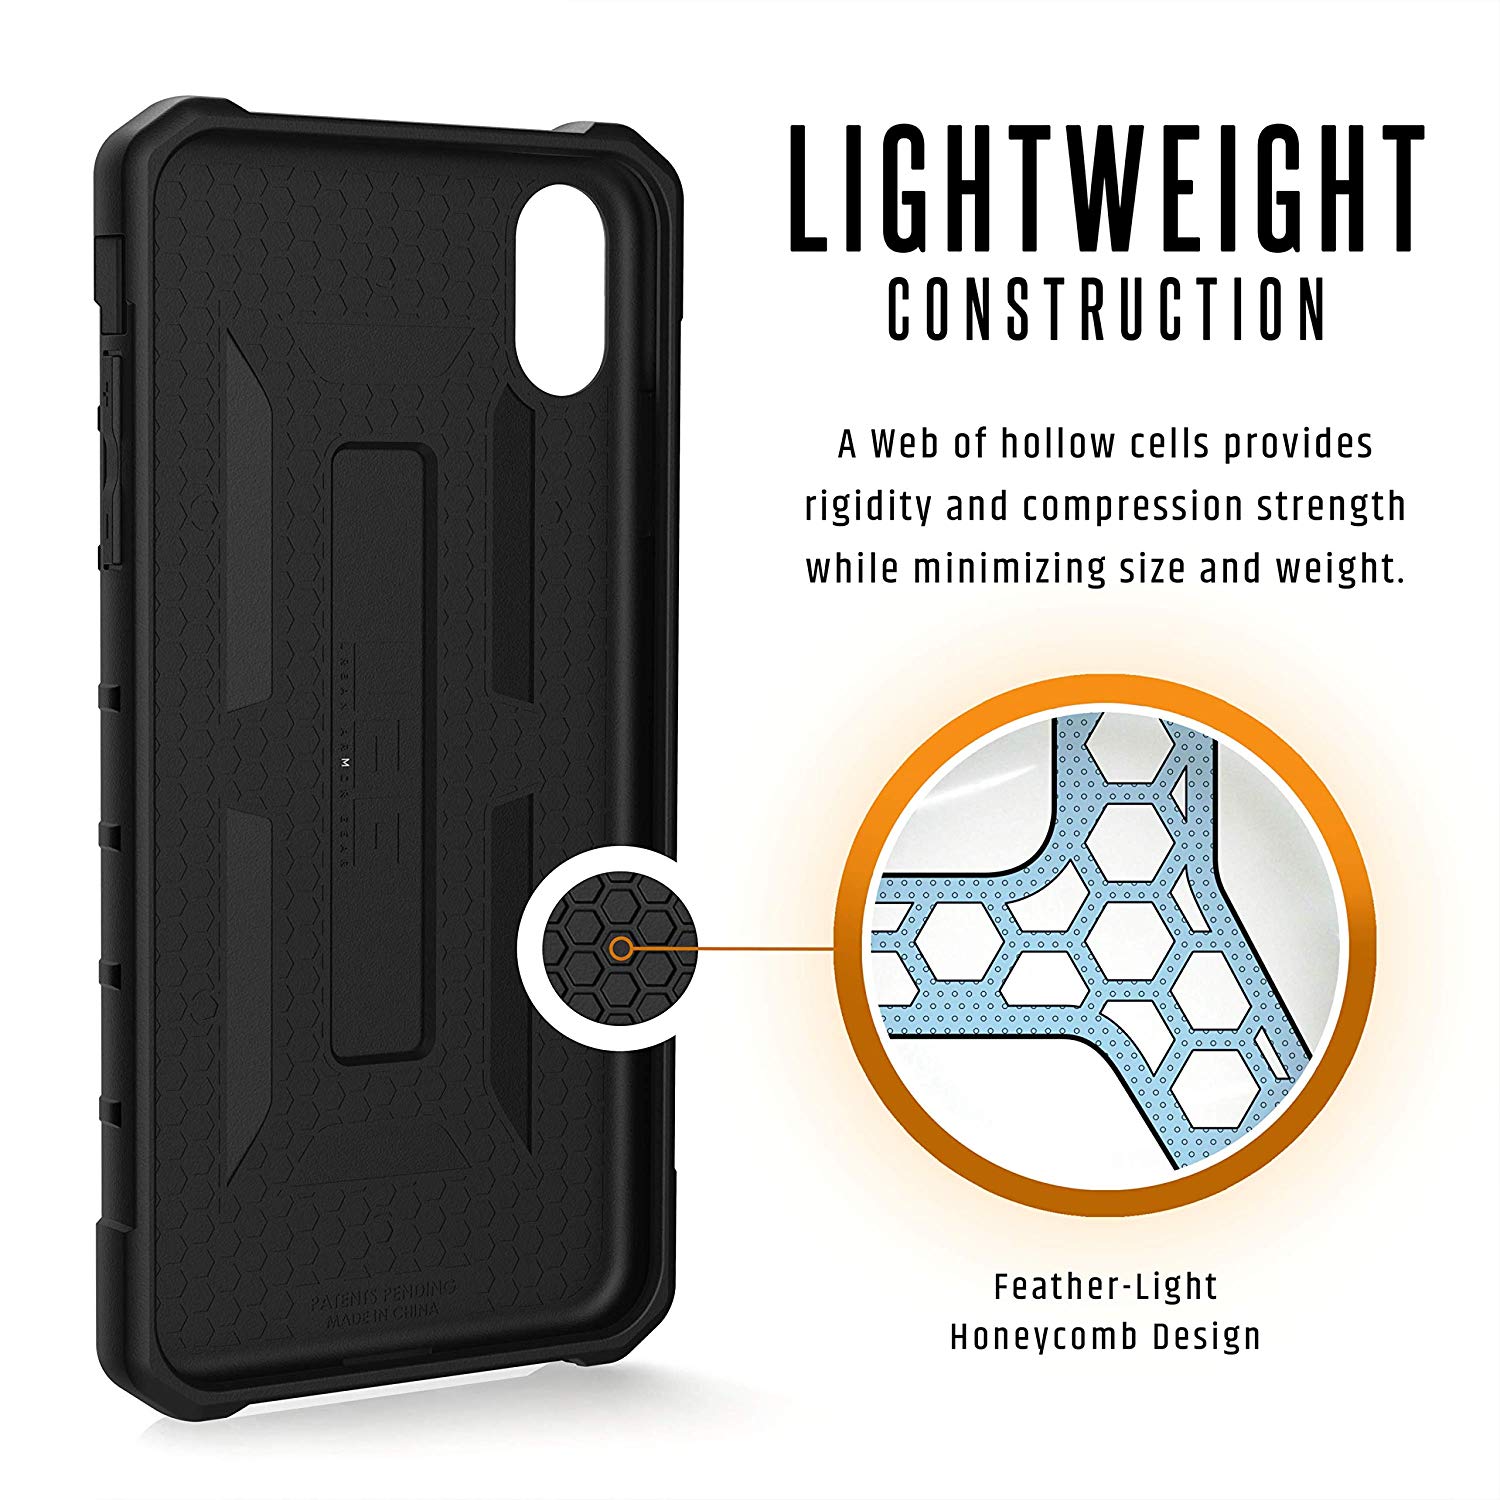 Чехол UAG Pathfinder Series Case Black для iPhone Xs Max